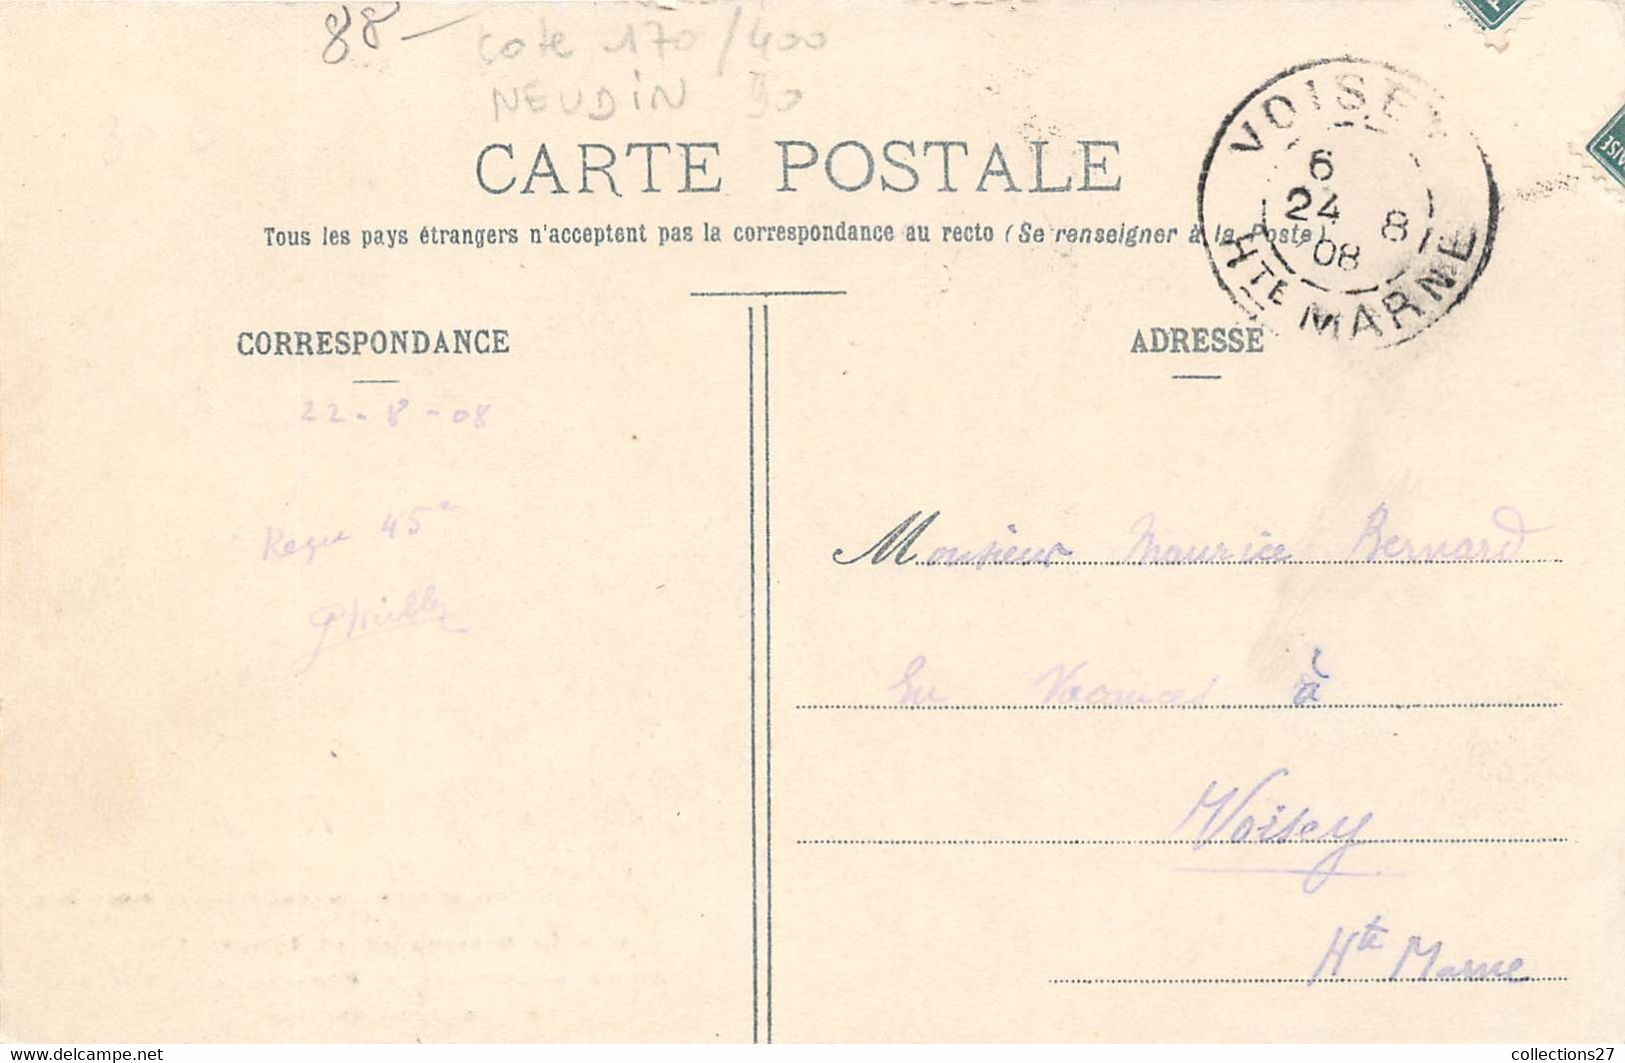 88-RAON-L'ETAPE -LA BAGARRE DU 28 JUILLET 1907 AVANT LA CHARGE , MENACE A L’ARMÉE A 3 HEURE 40 - Raon L'Etape